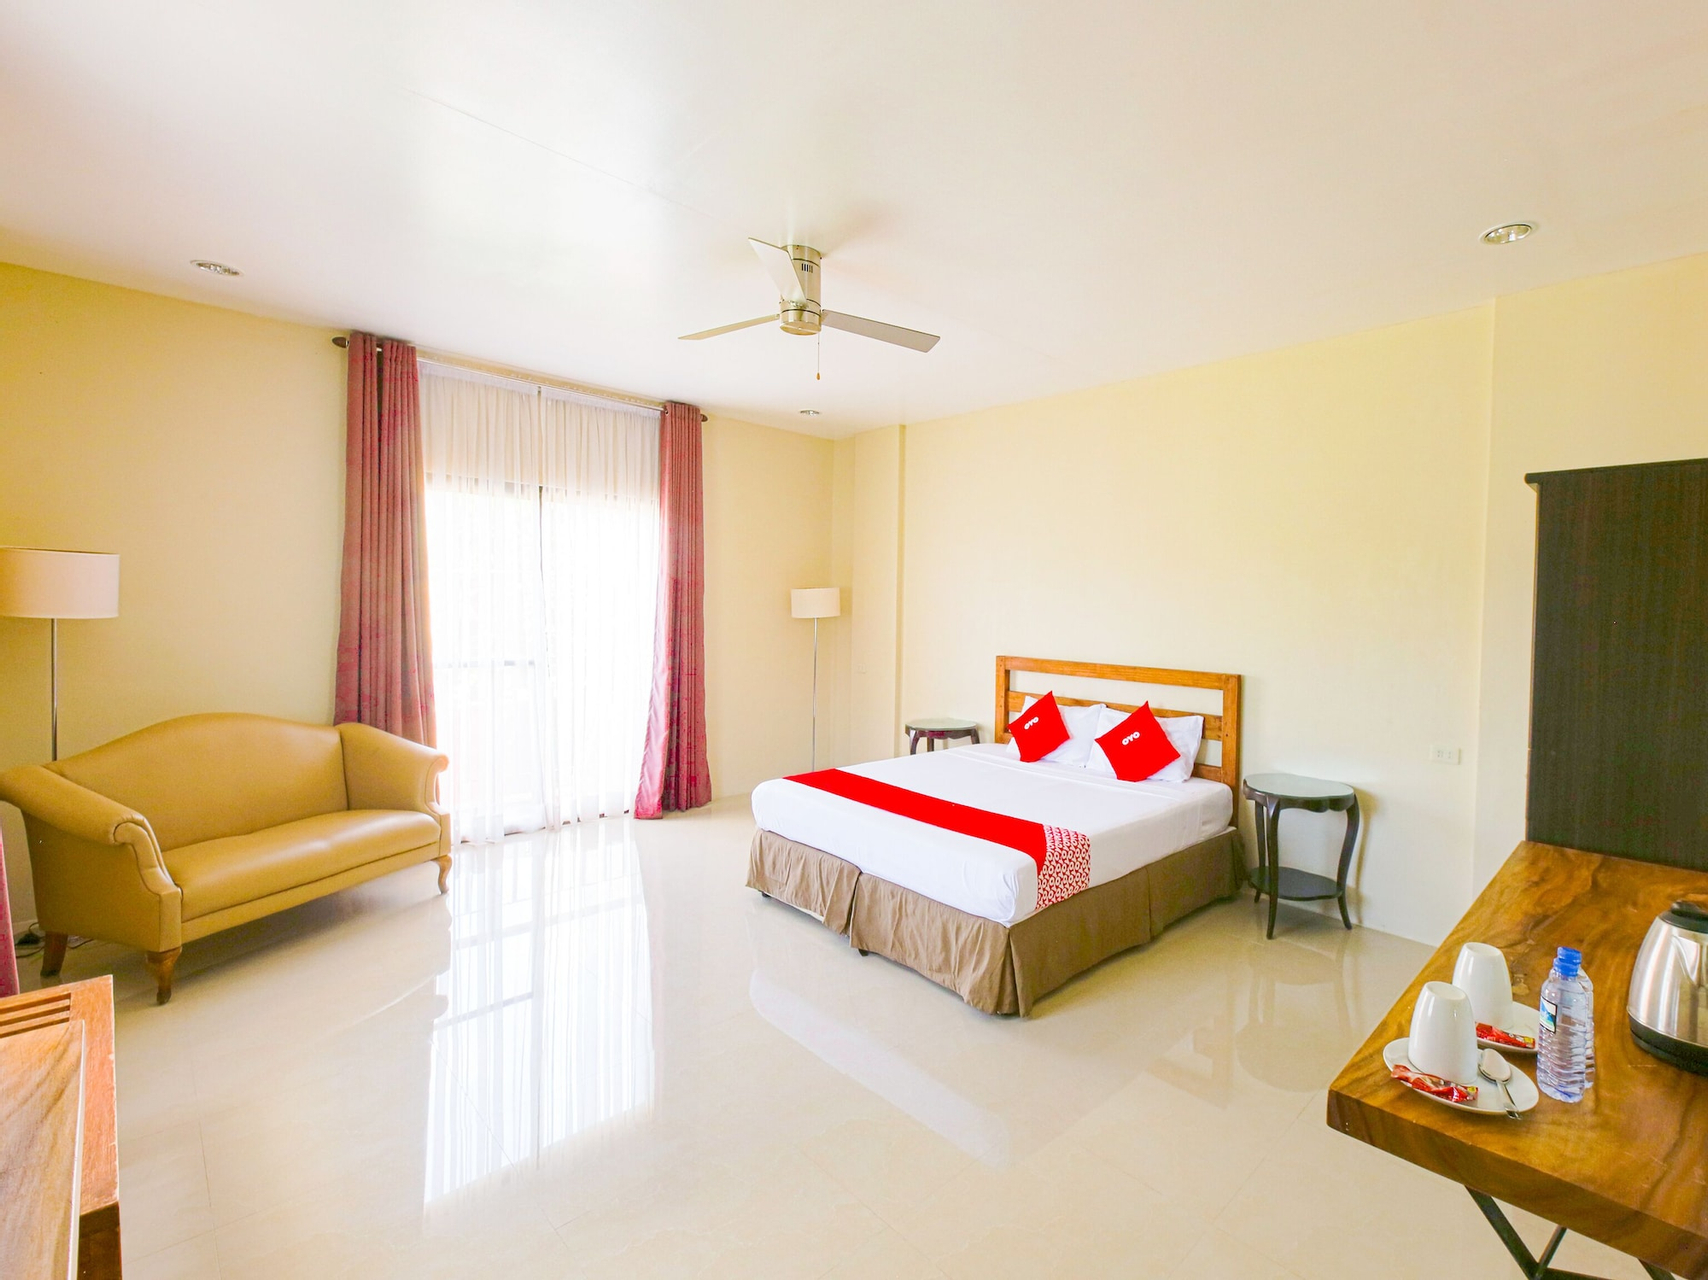 Bedroom 3, OYO 792 Wil's Suites, Tagaytay City